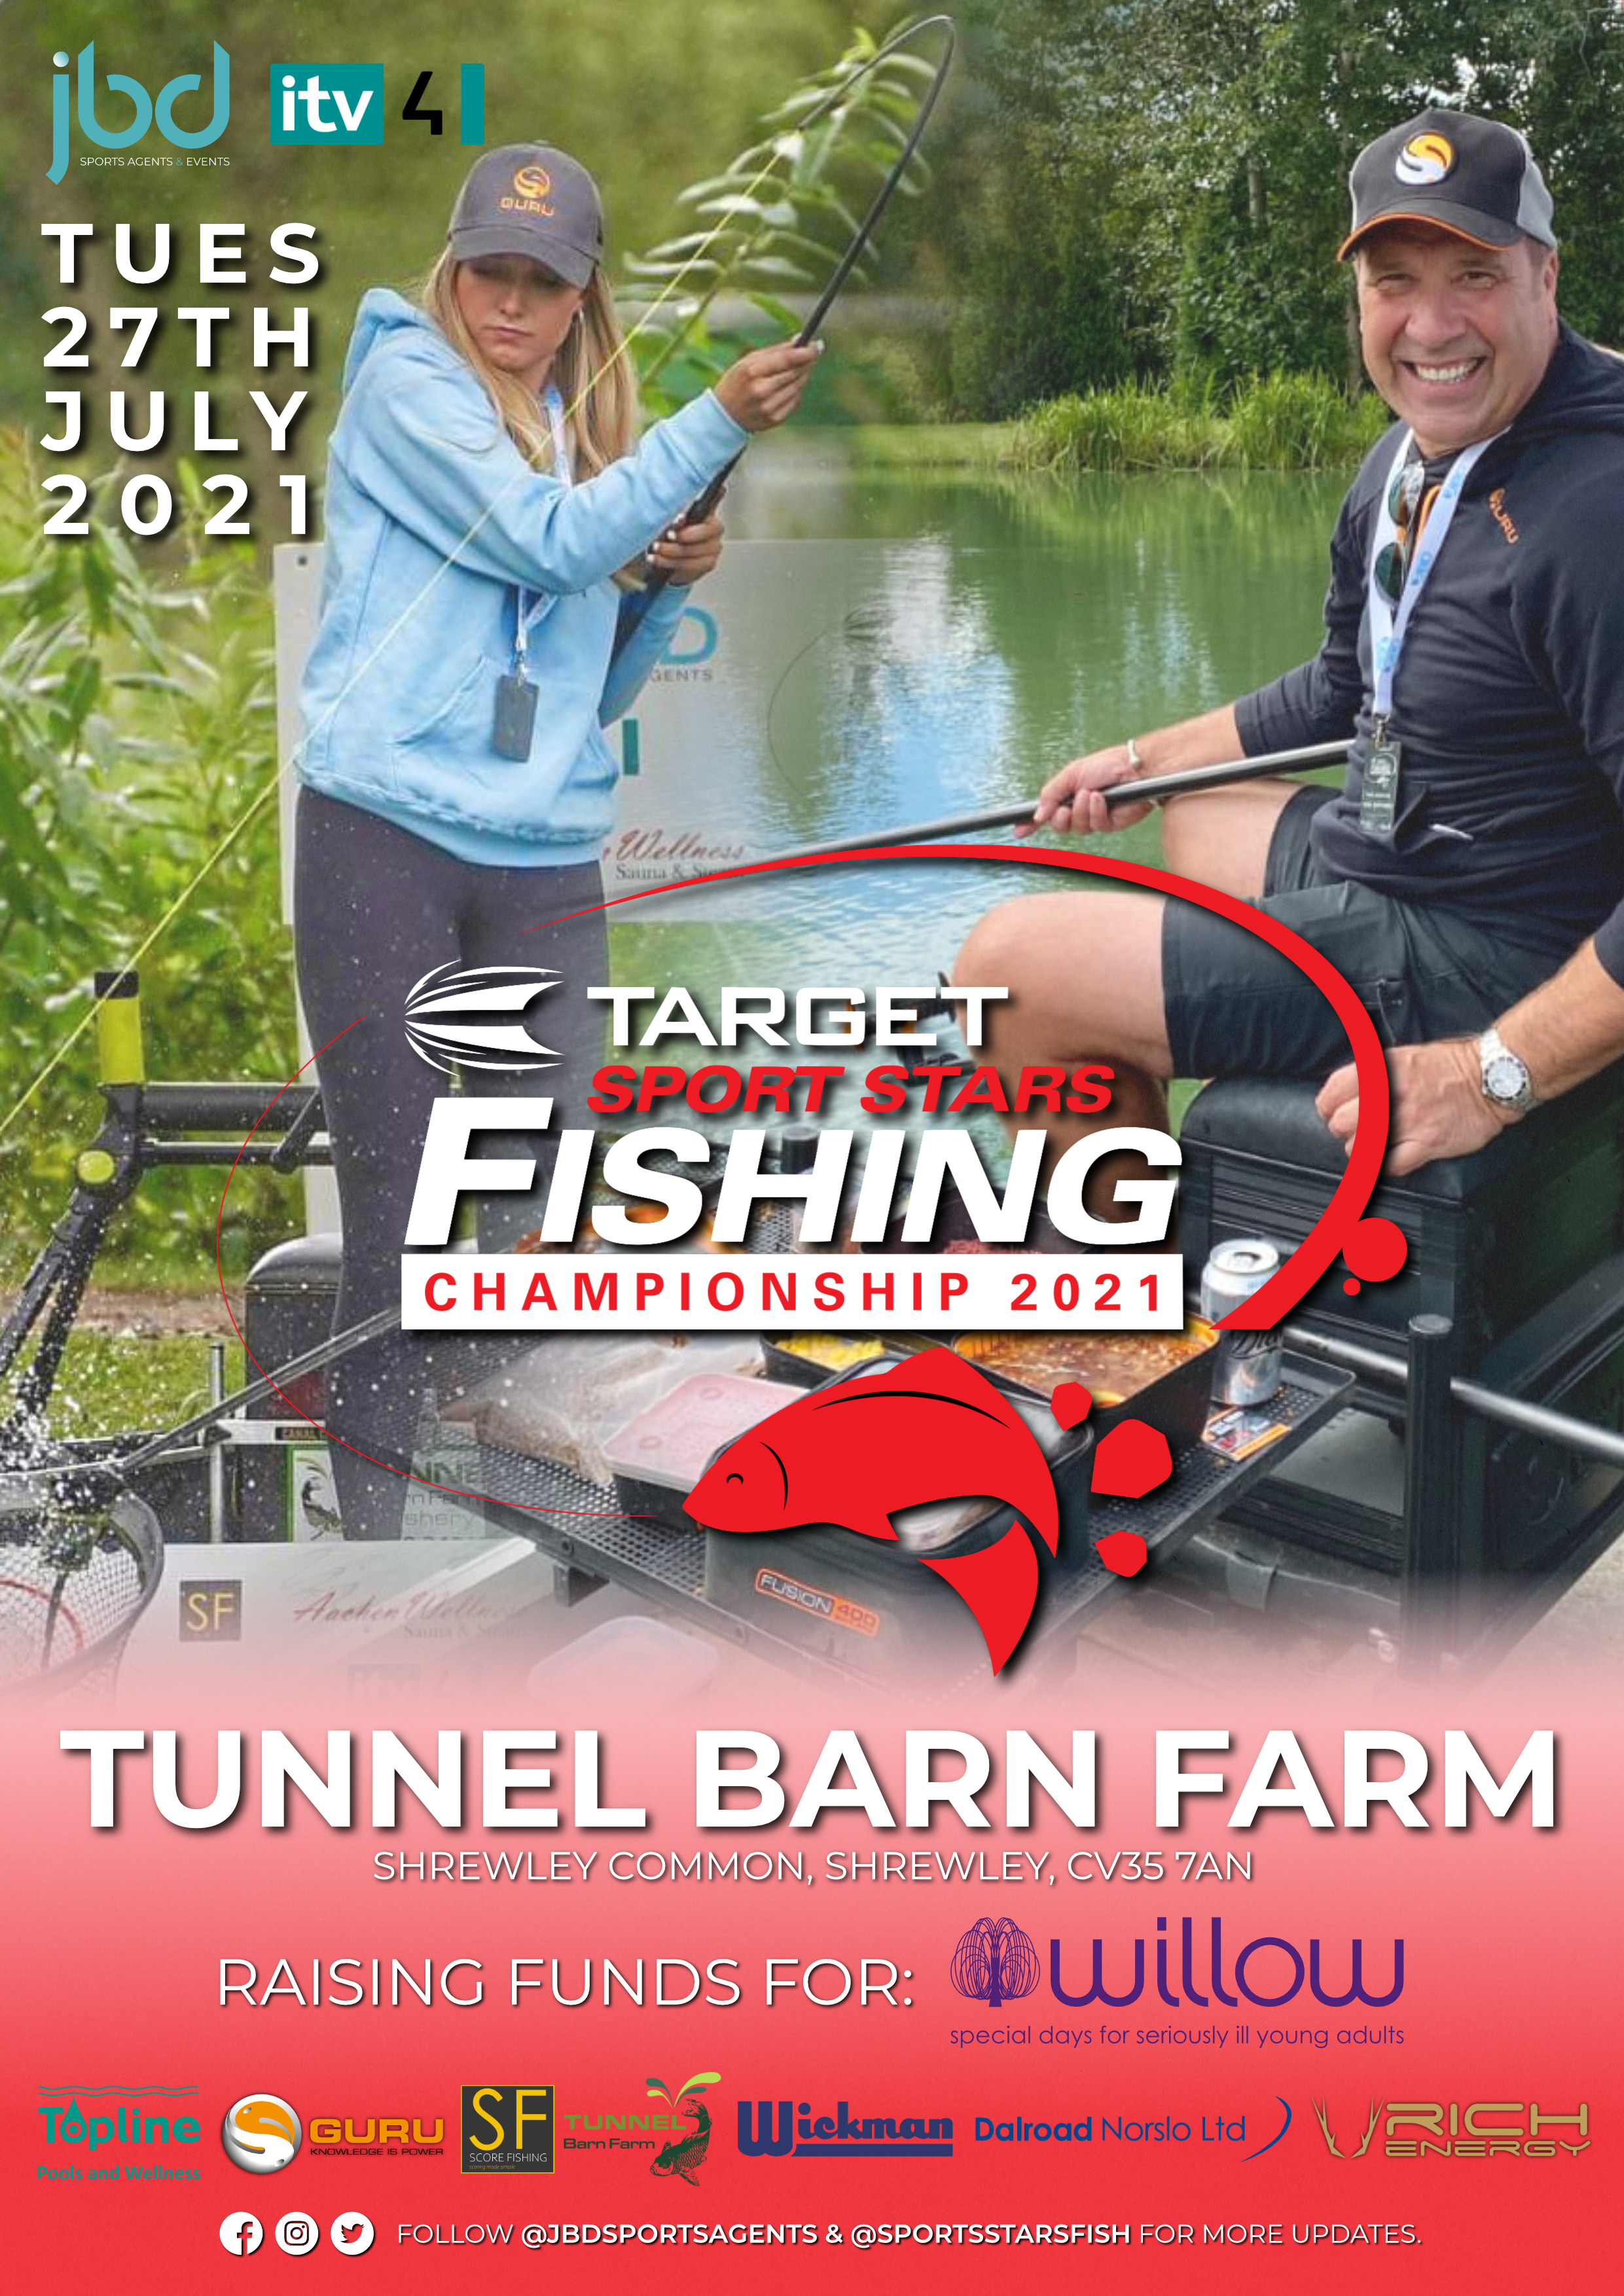 Proud Sponsors of the Star Fishing Championship 2021